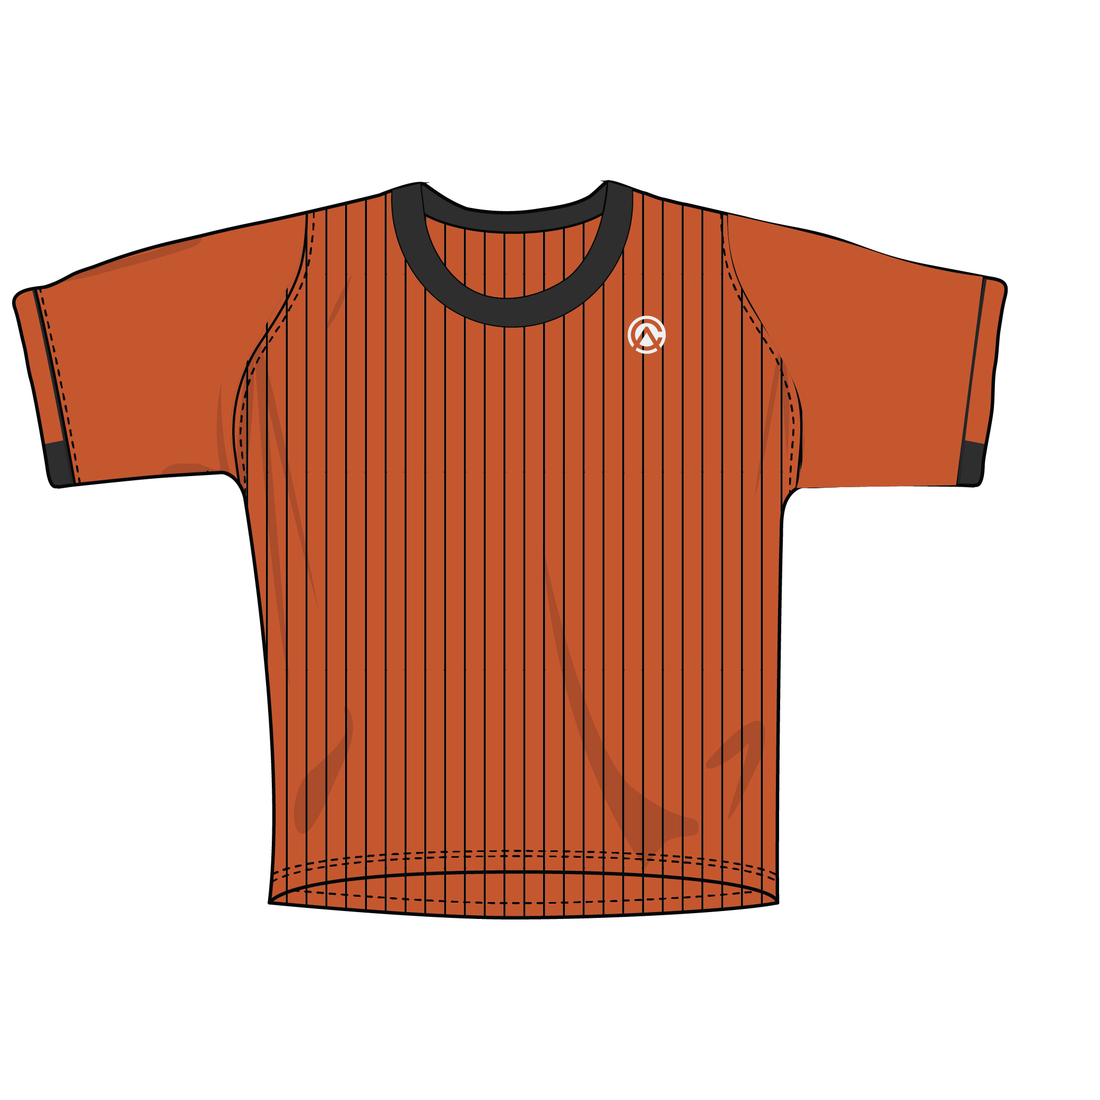 Clubhouse Original: Pinstripe Body Short Sleeve Lacrosse Jersey